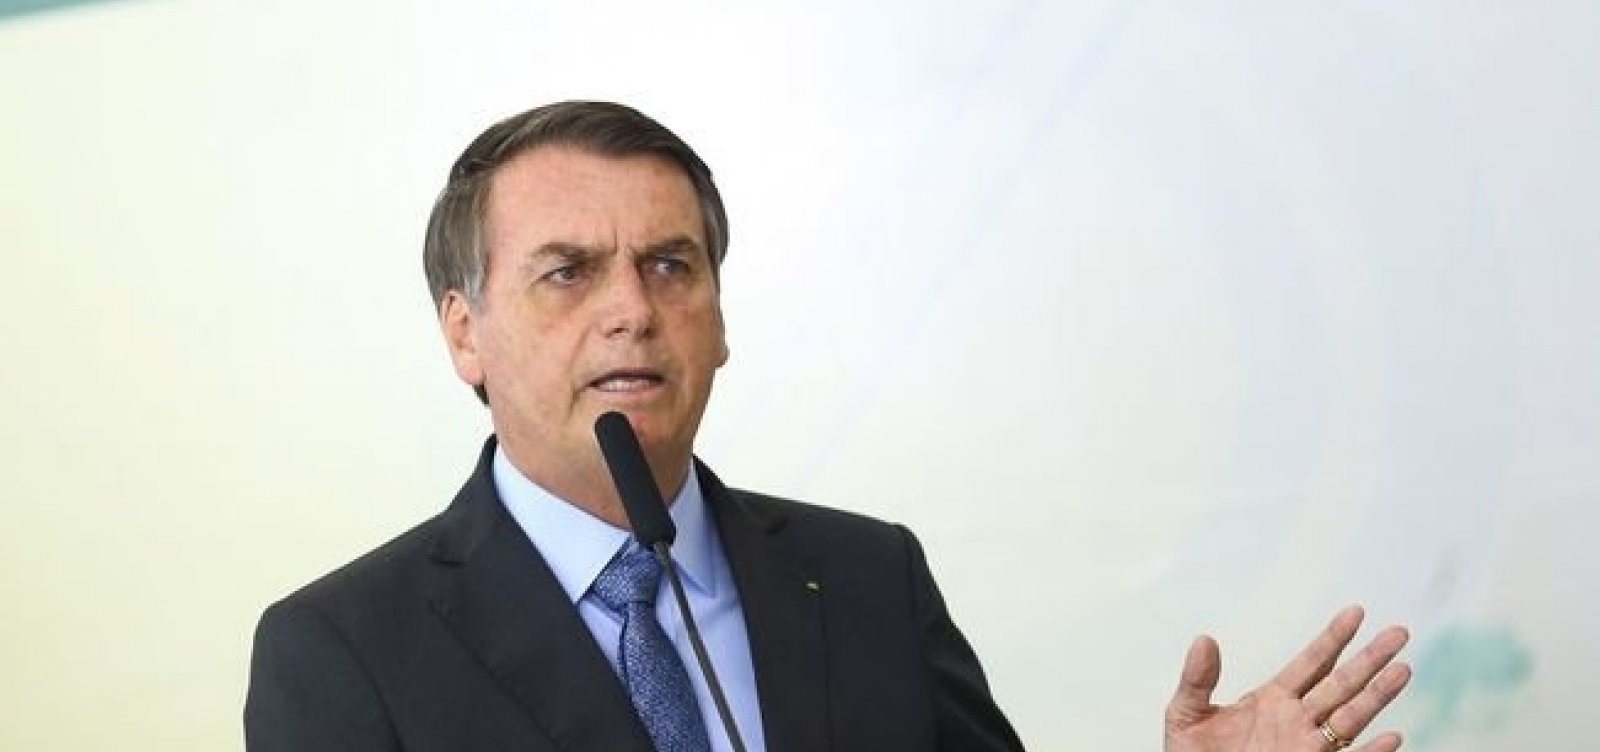 Brasil deixará Mercosul caso Argentina 'crie problema', diz Bolsonaro